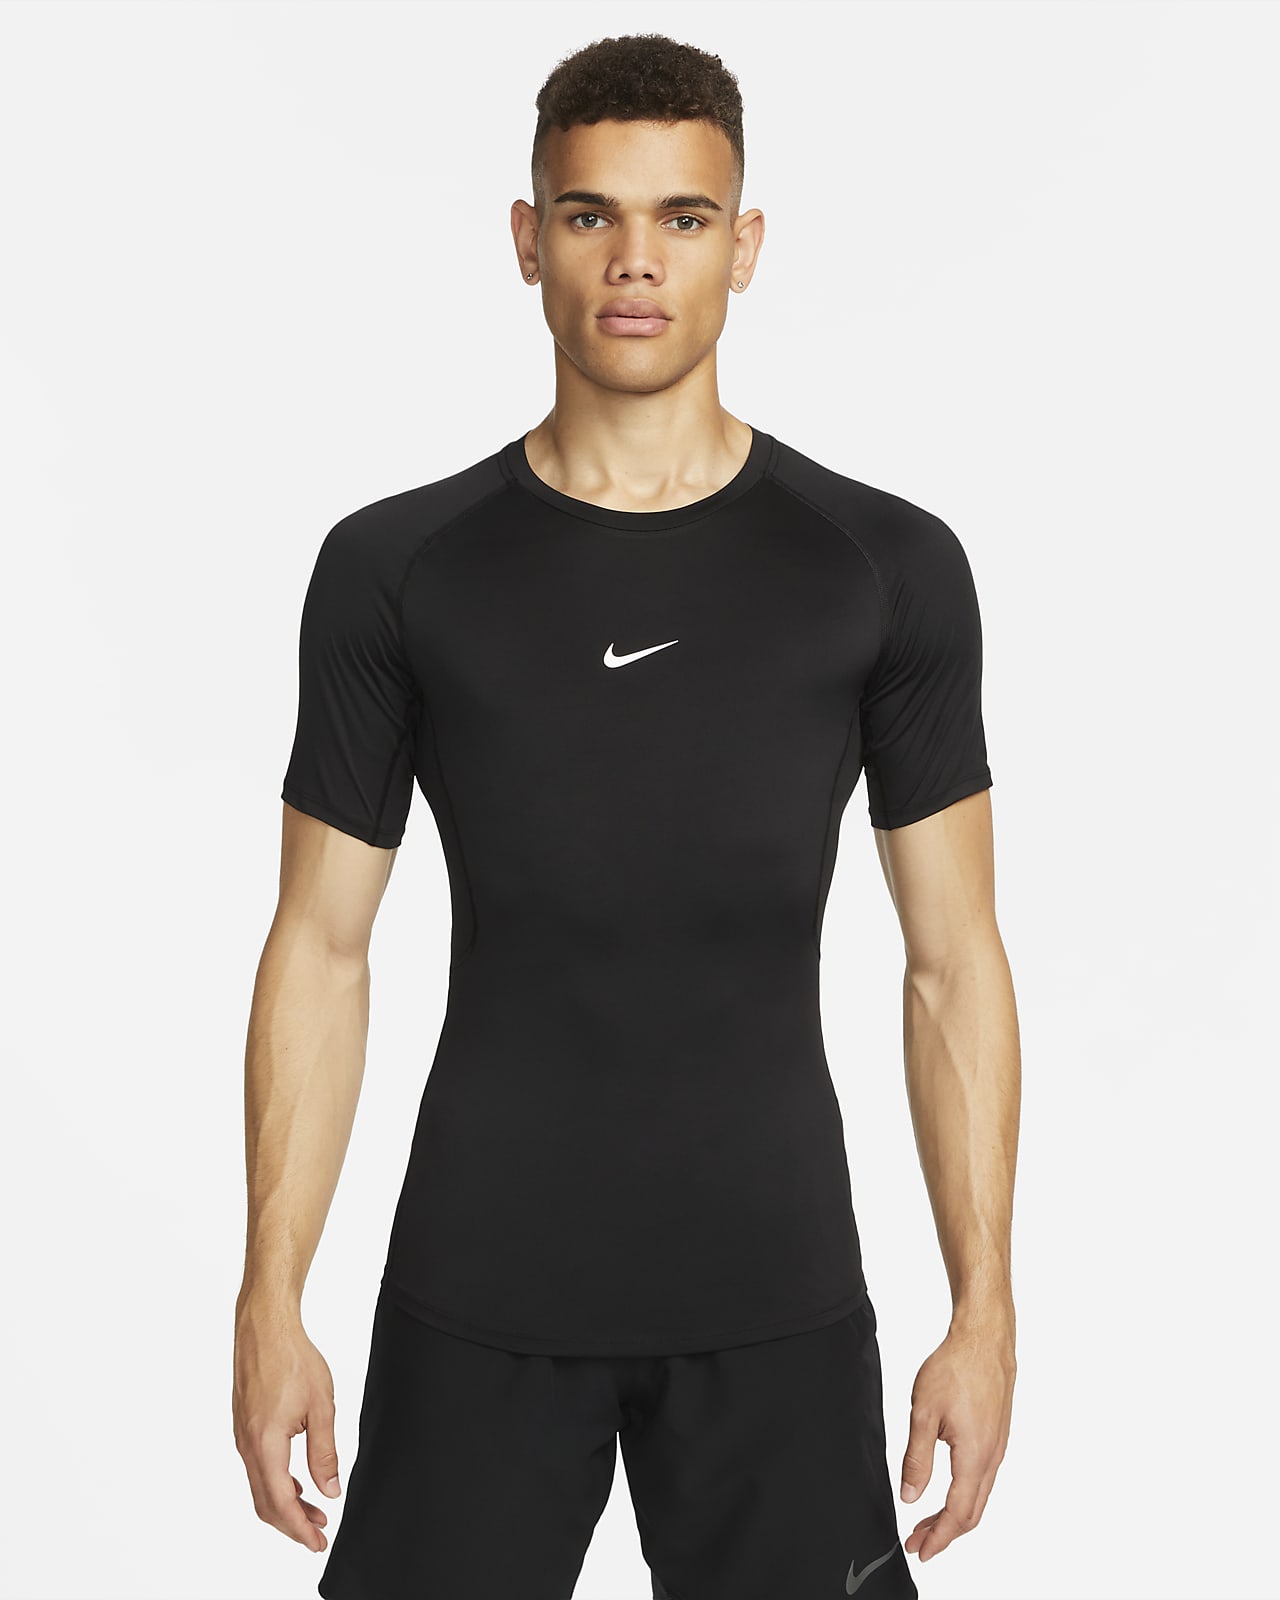 Nike Men's Tight Short-Sleeve Fitness Nike.com